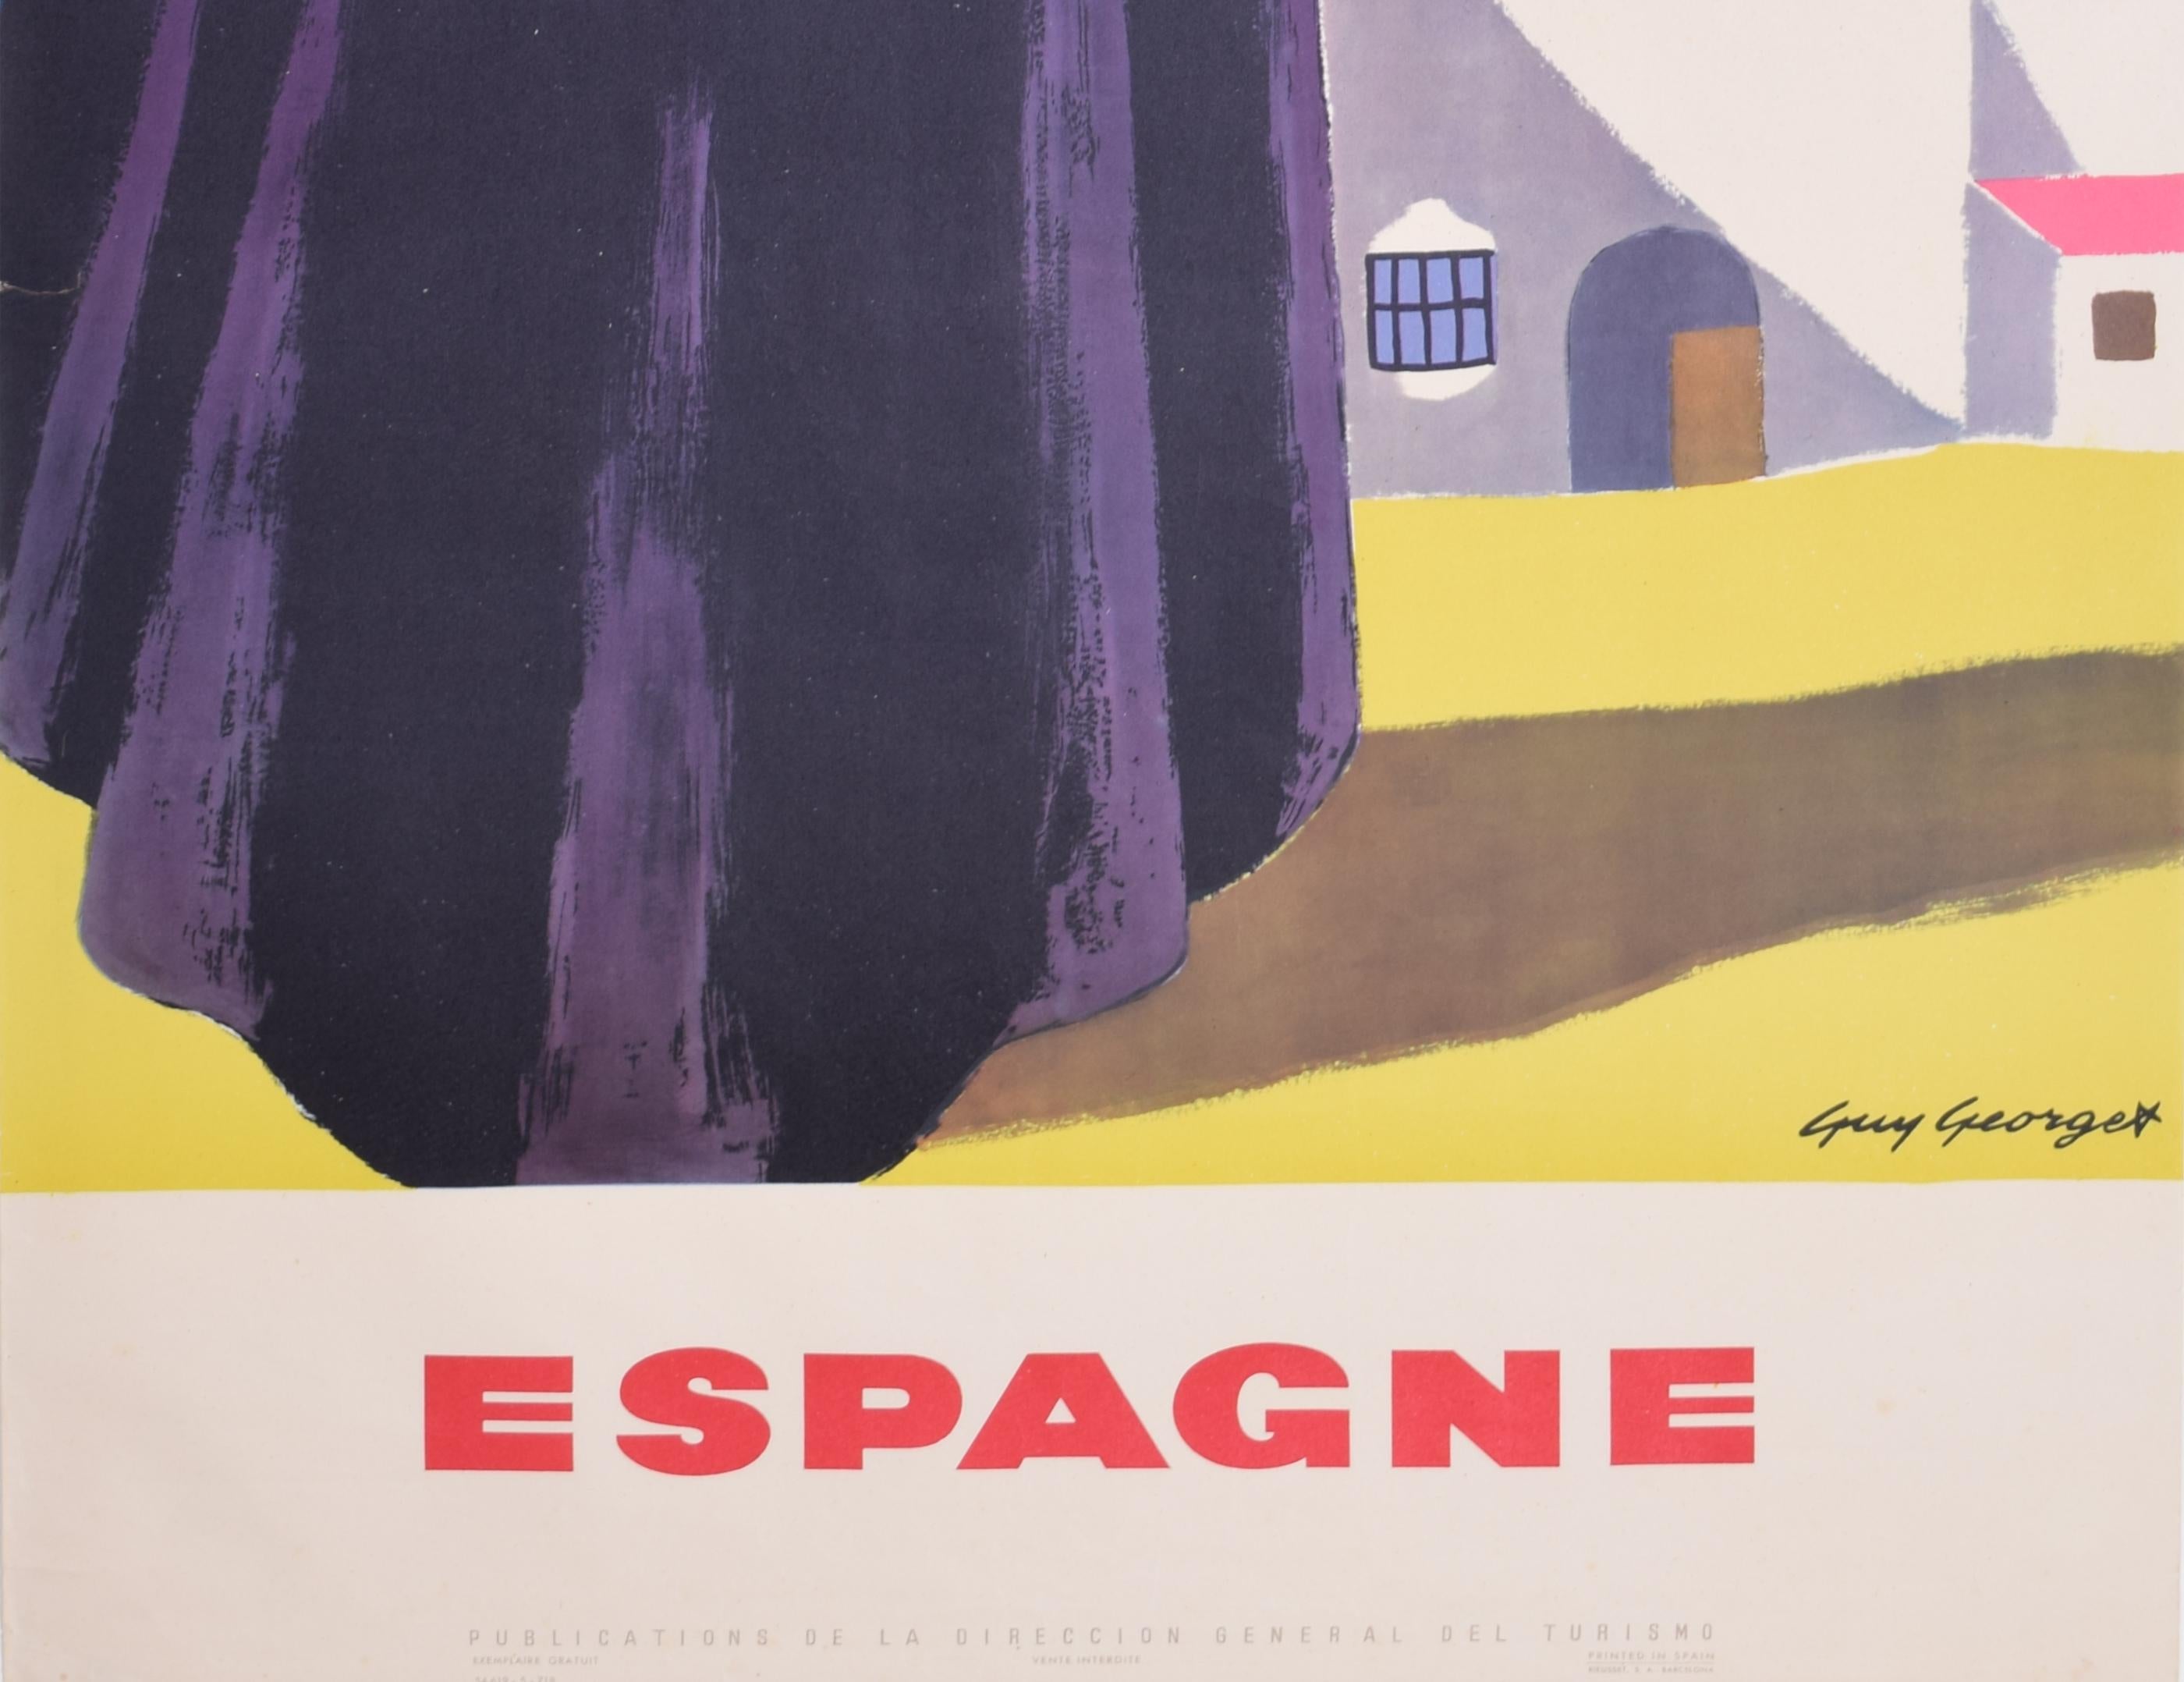 Espagne Spanish pilgrims original vintage poster by Guy Georget For Sale 3